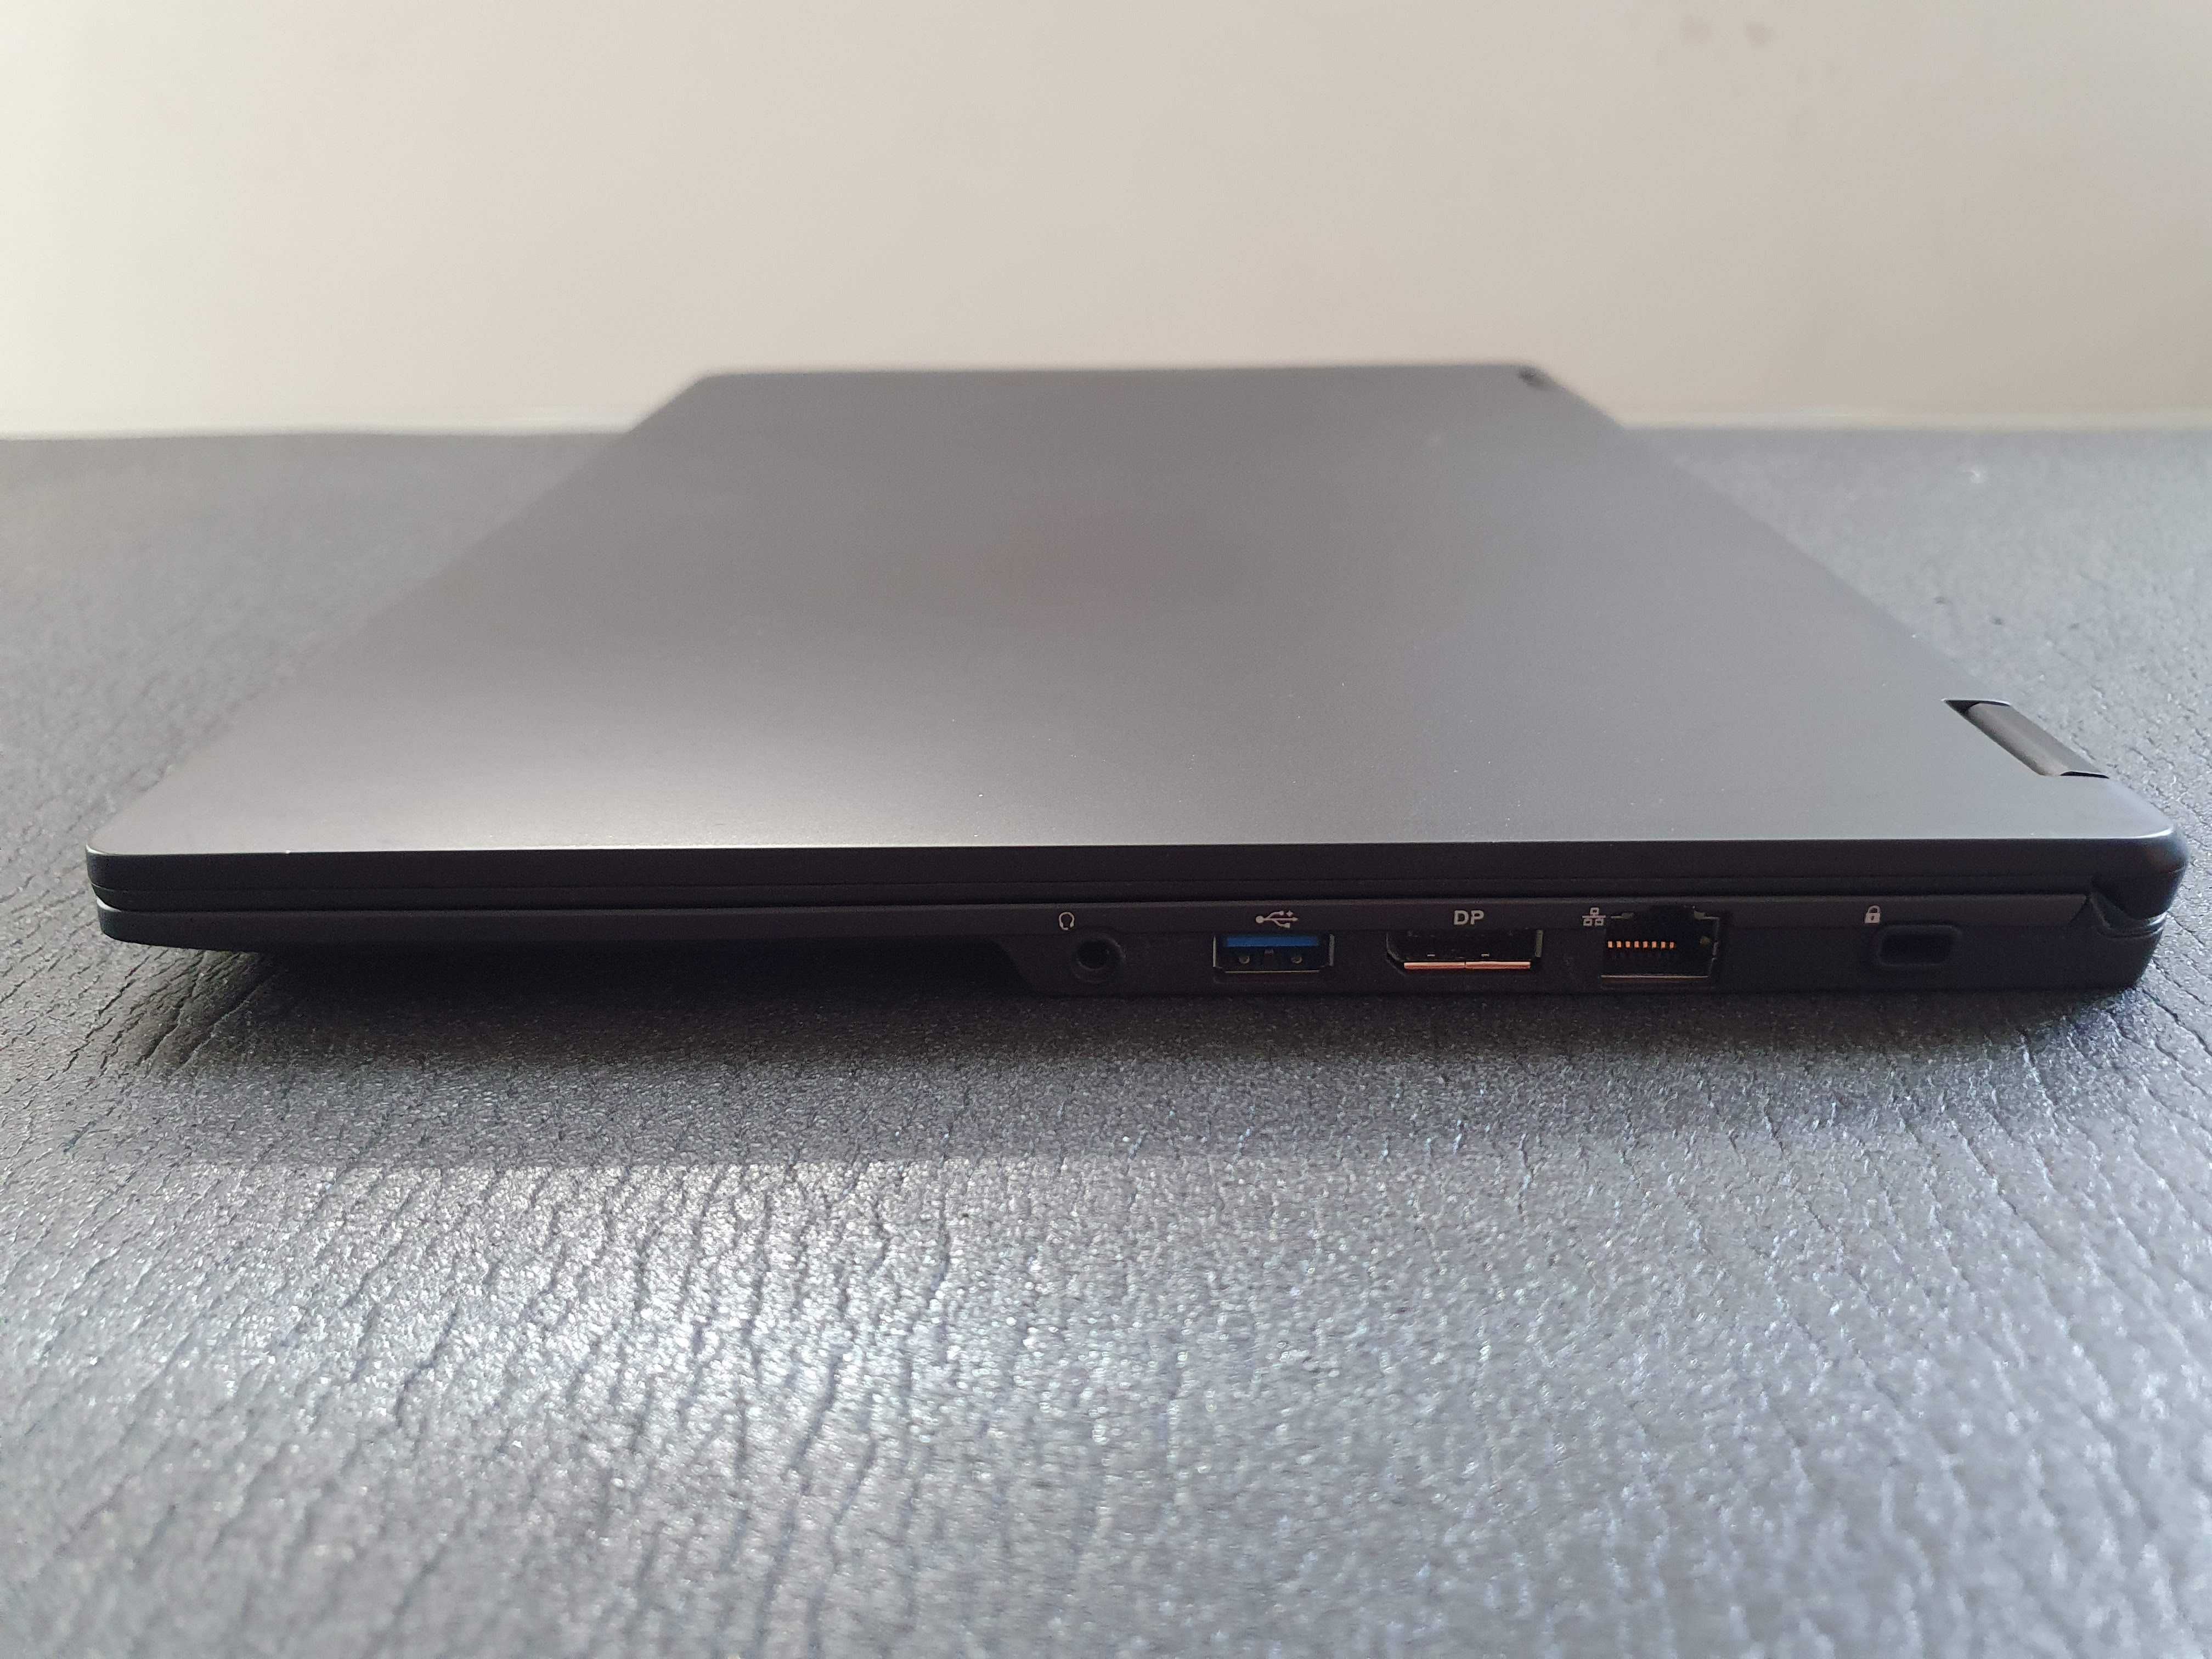 Fujitsu LifeBook U748